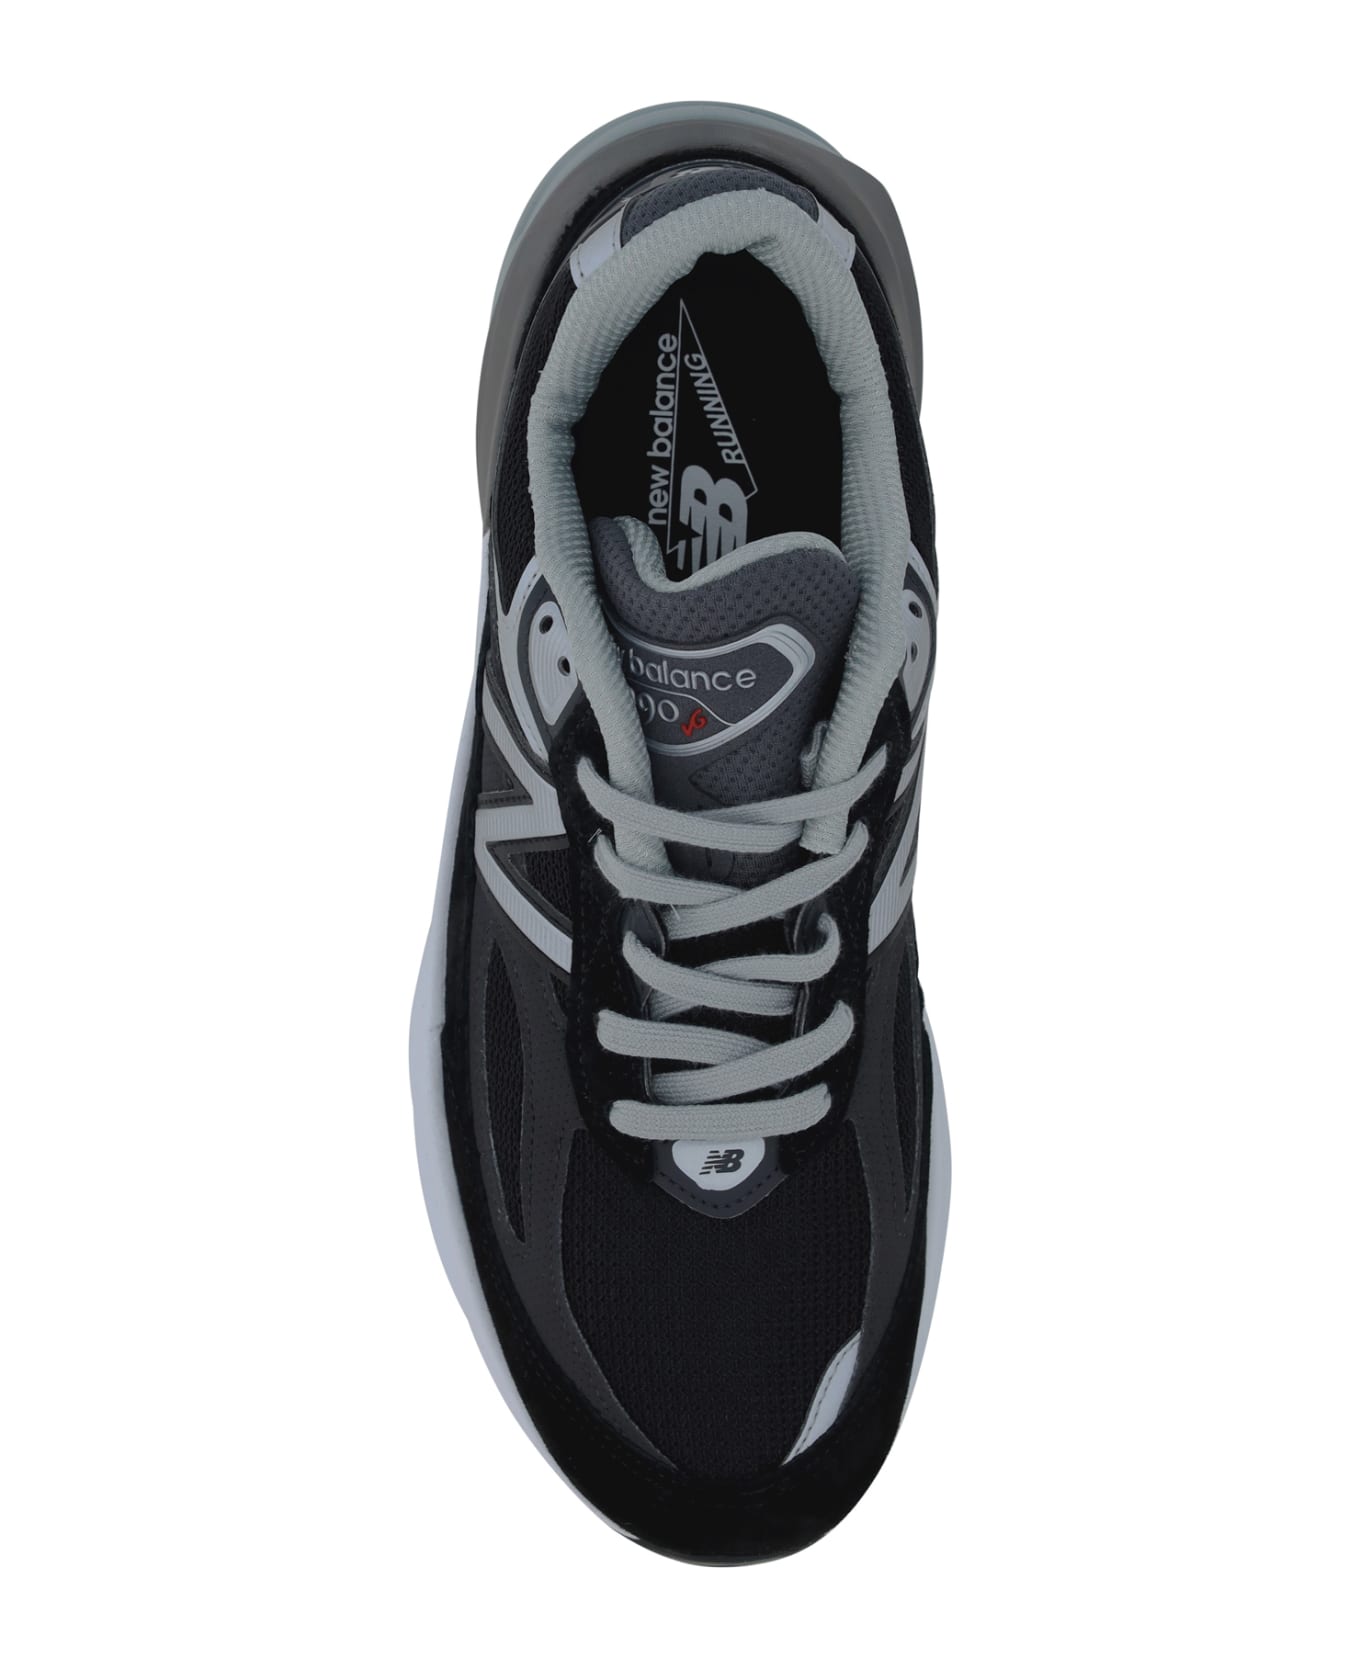 New Balance M990bk6 Sneakers - Black